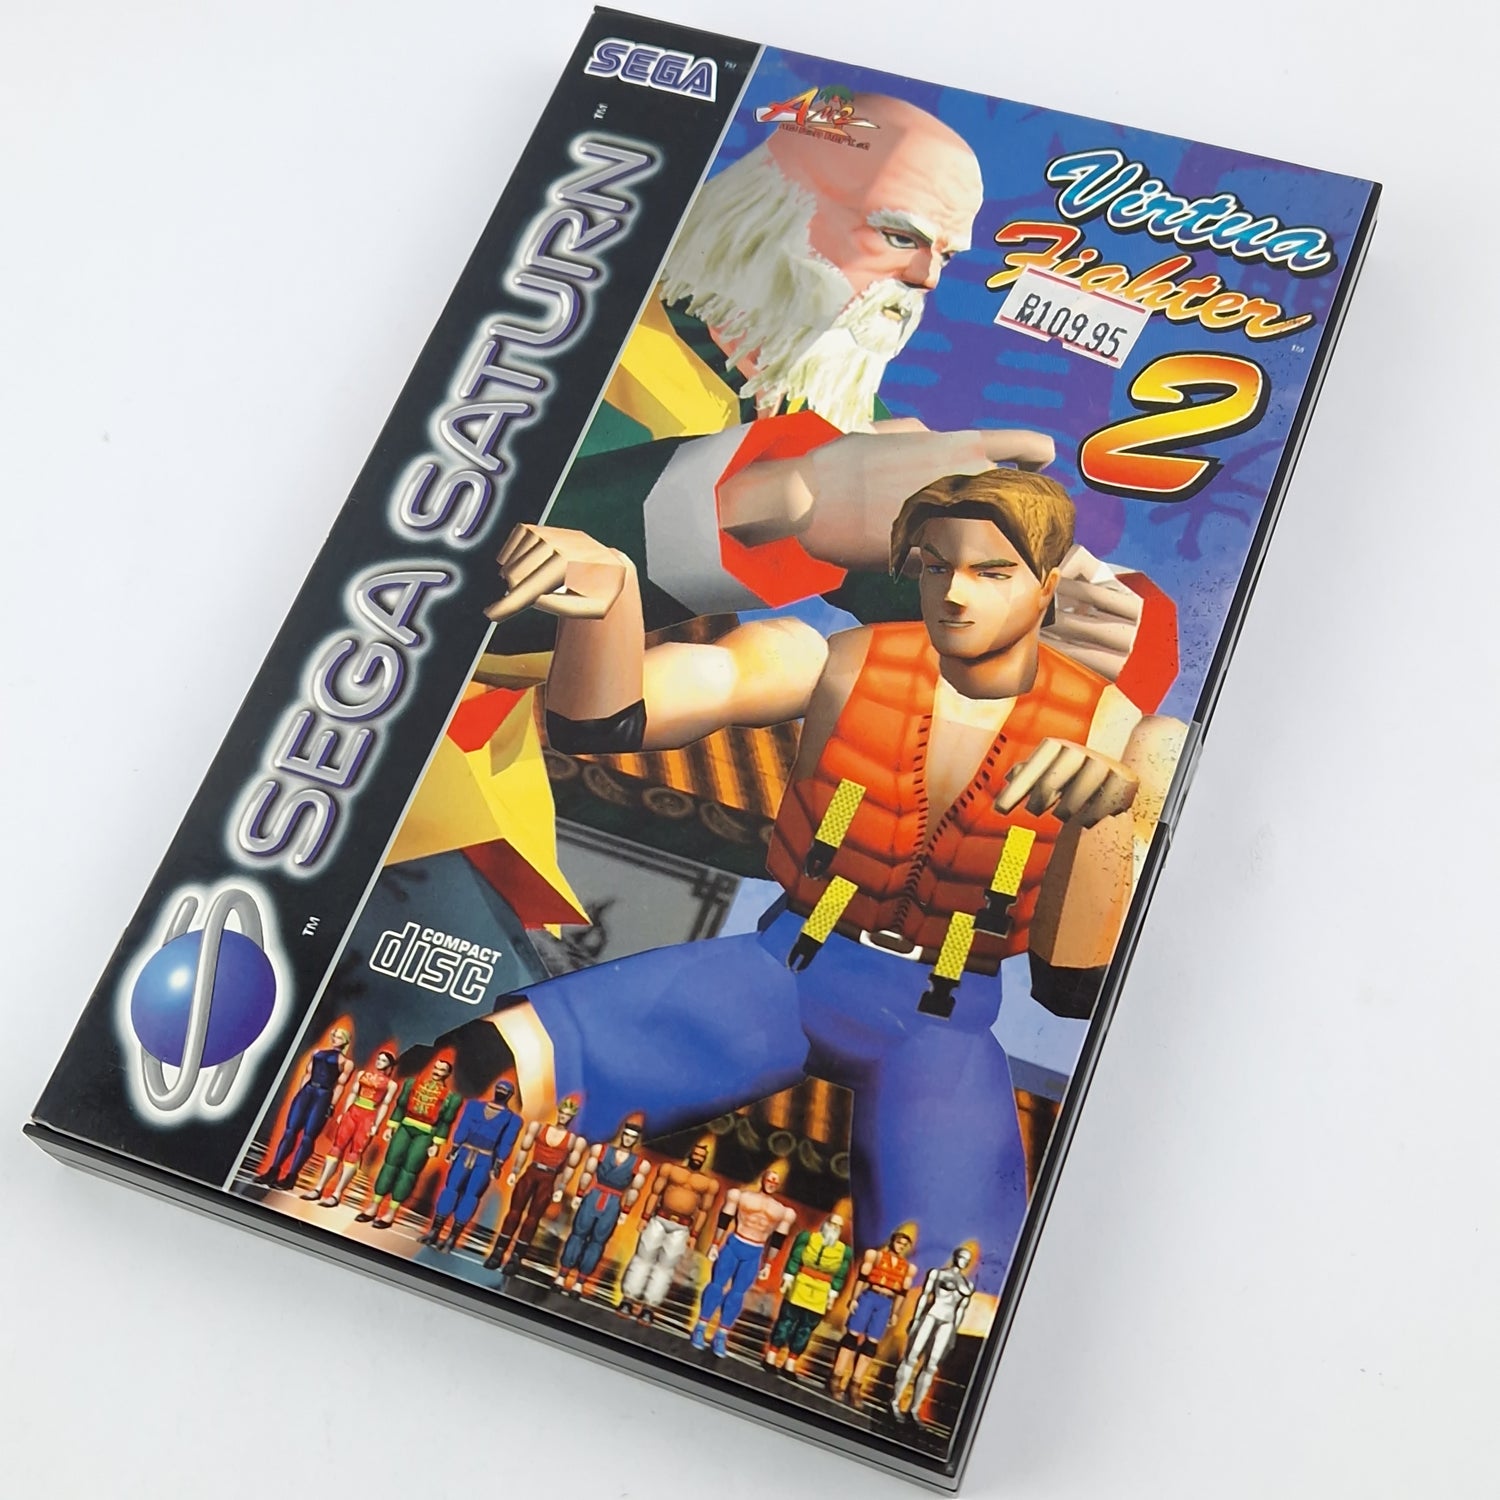 Sega Saturn Game: Virtua Fighter 2 - CD Instructions OVP cib | PAL Disk Game